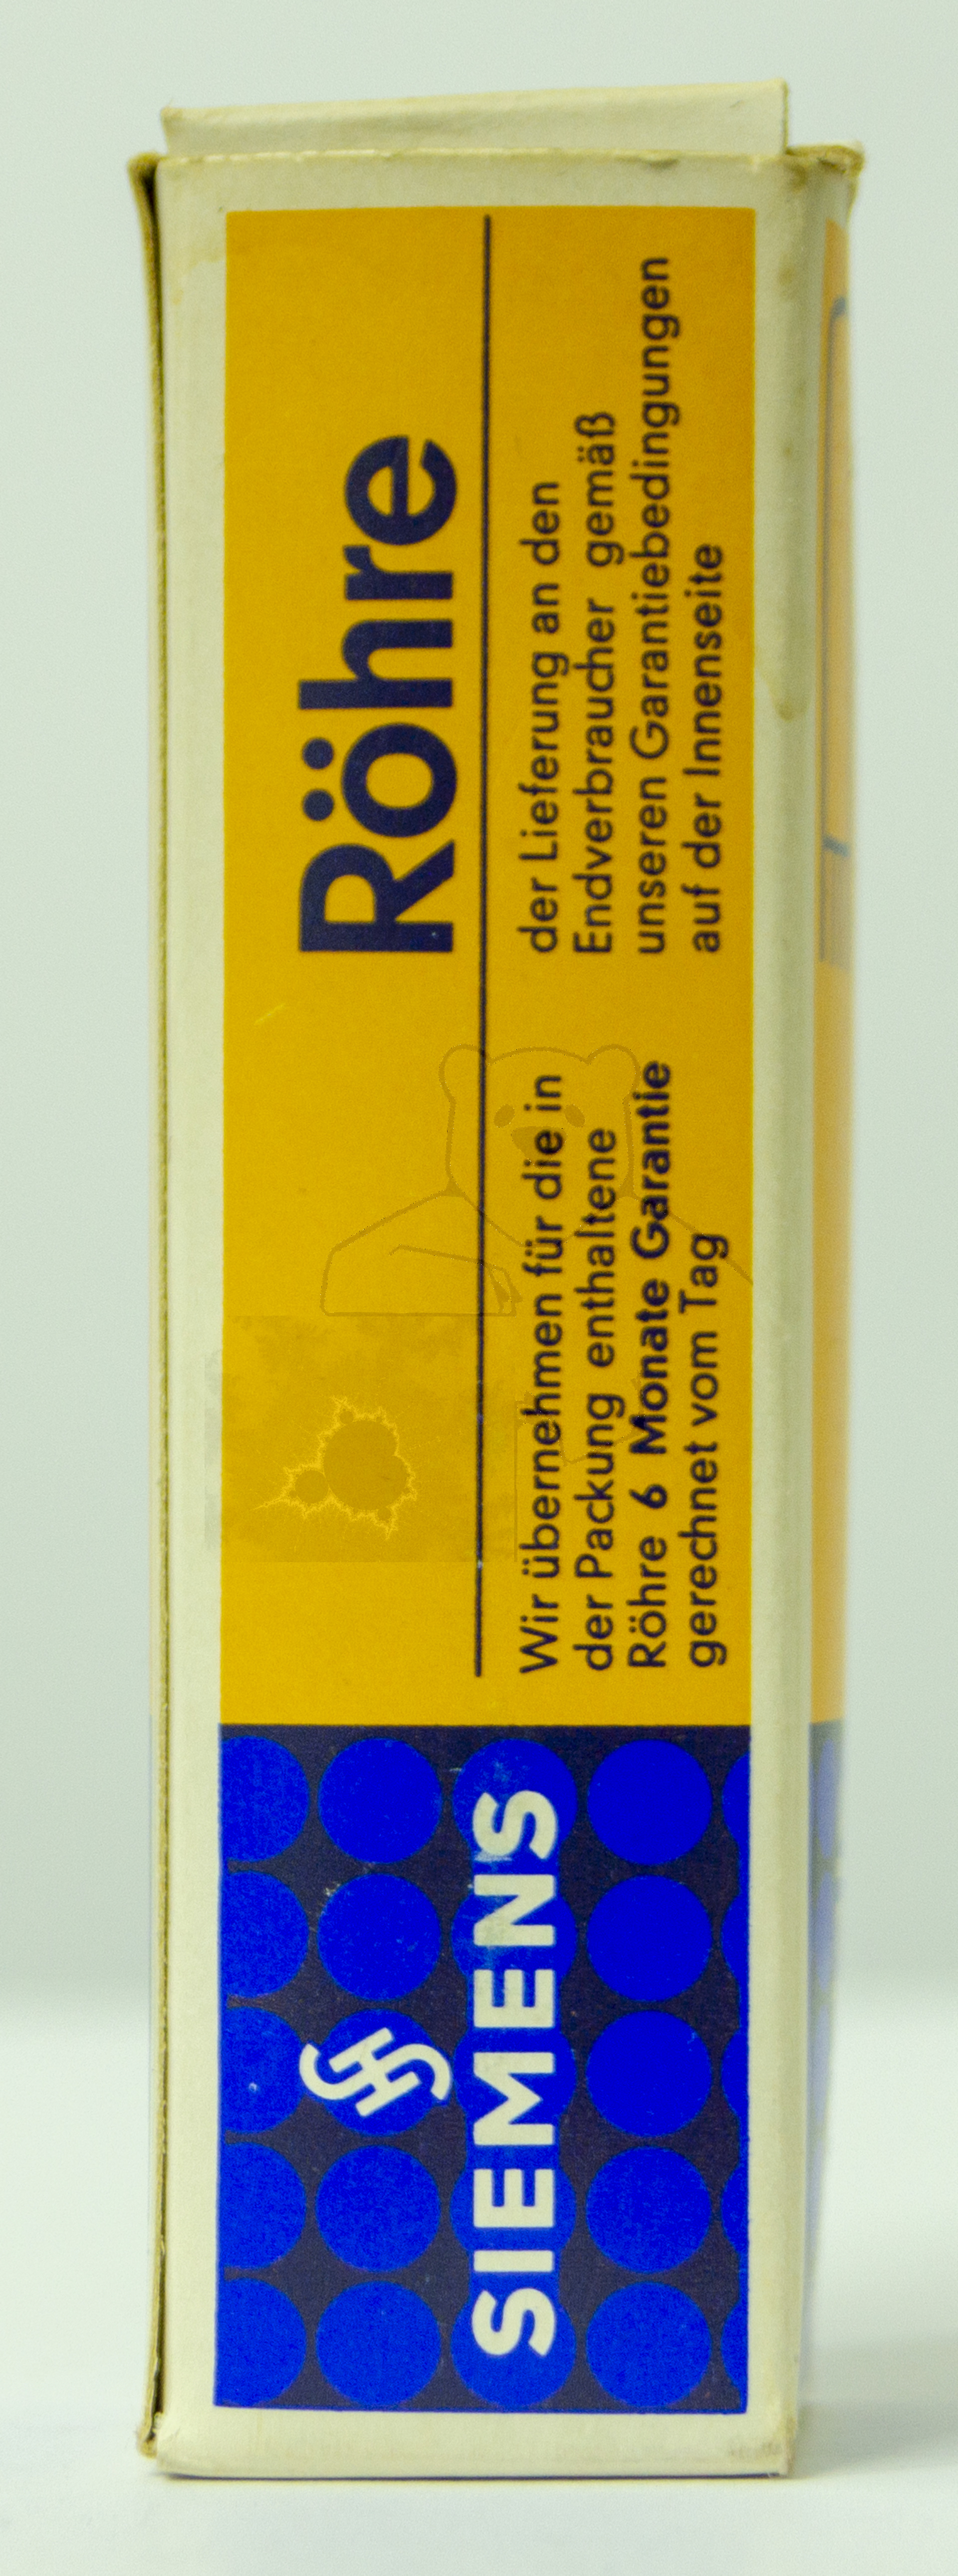 Röhre PCF803 #4550 Verpackung Bild 1